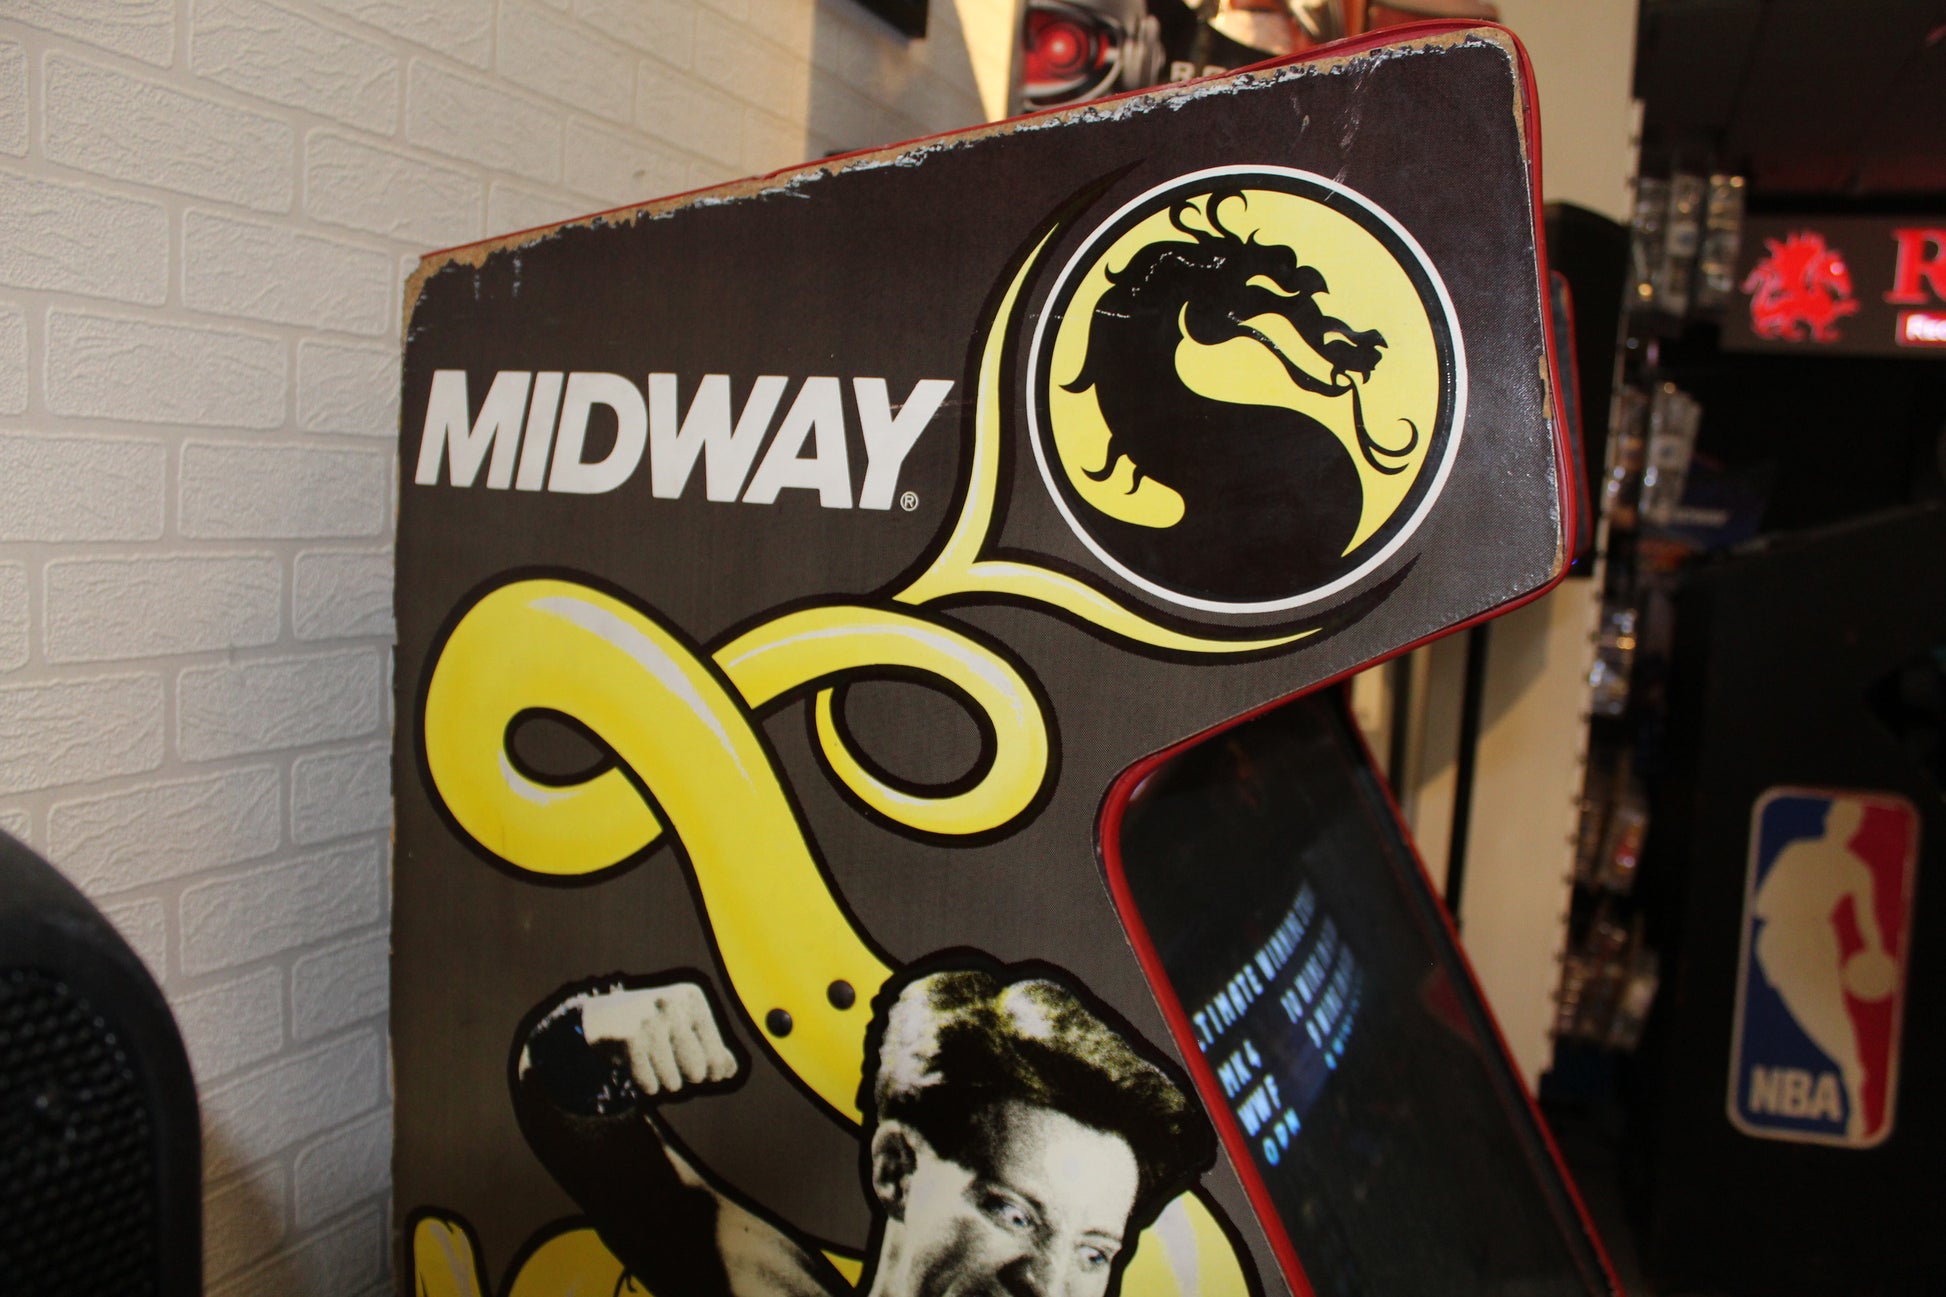 Ultimate Mortal Kombat 3 - Midway Mfg. Co. WMS (Video Game, 1995) - USA